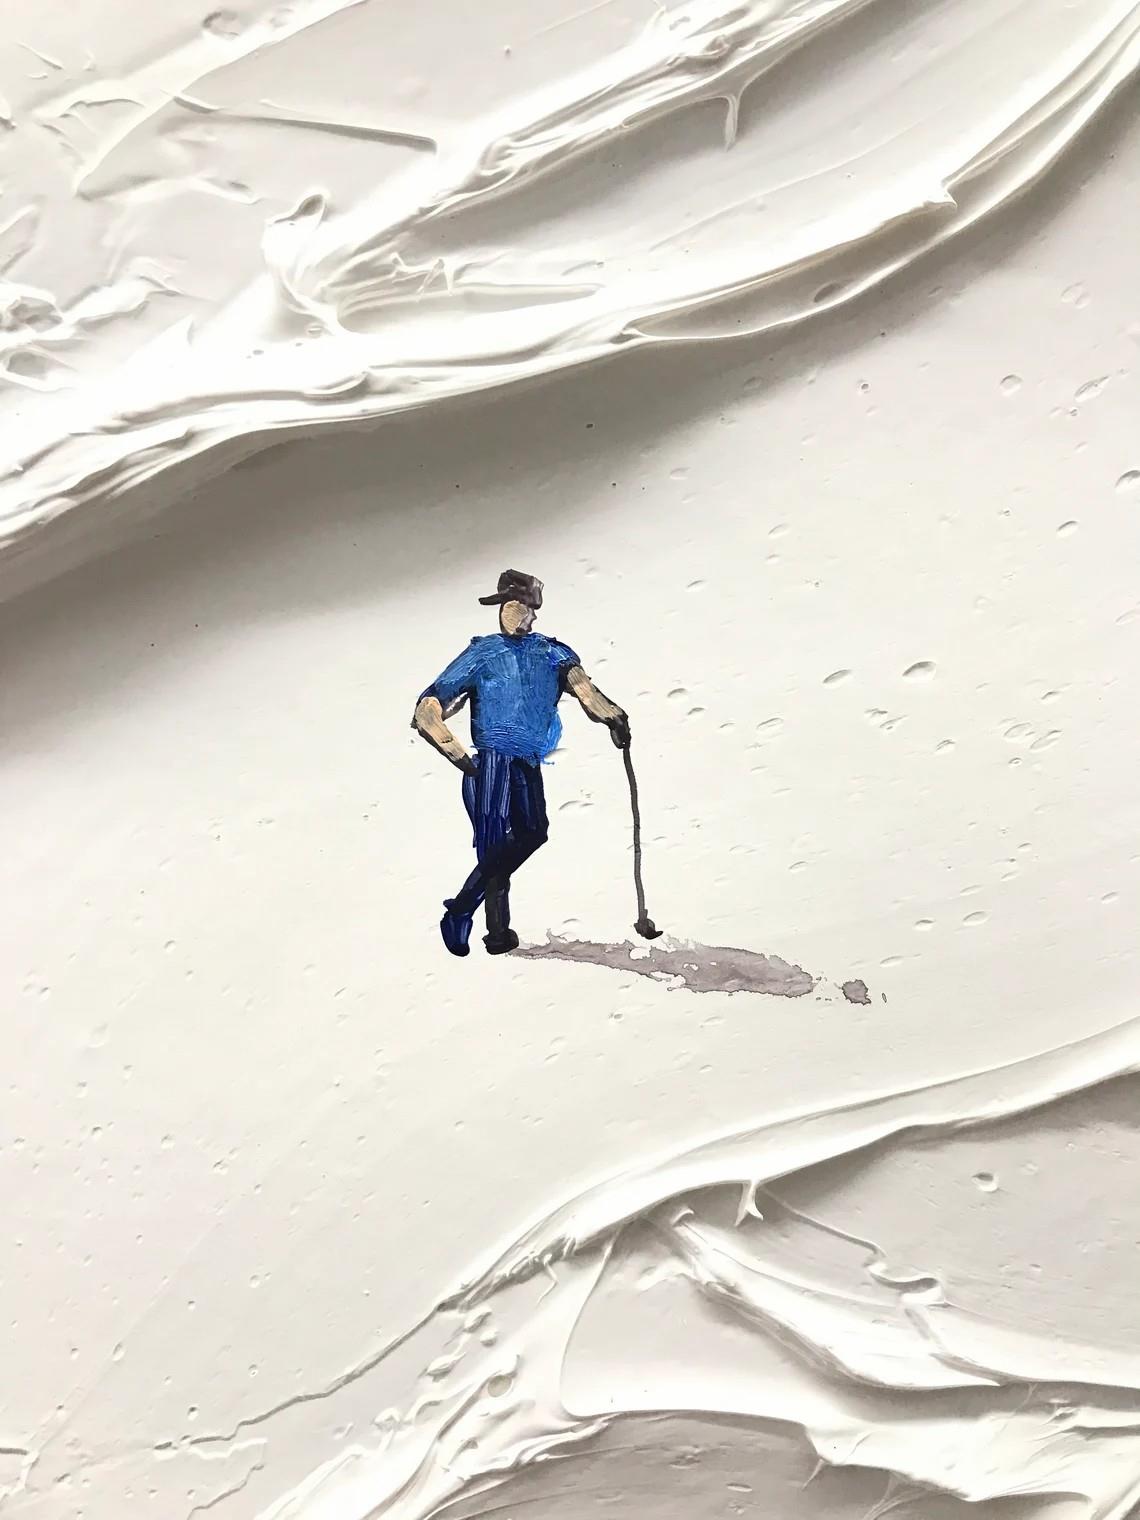 Golf Sport de Palette Knife detalle1 arte mural minimalista Pintura al óleo